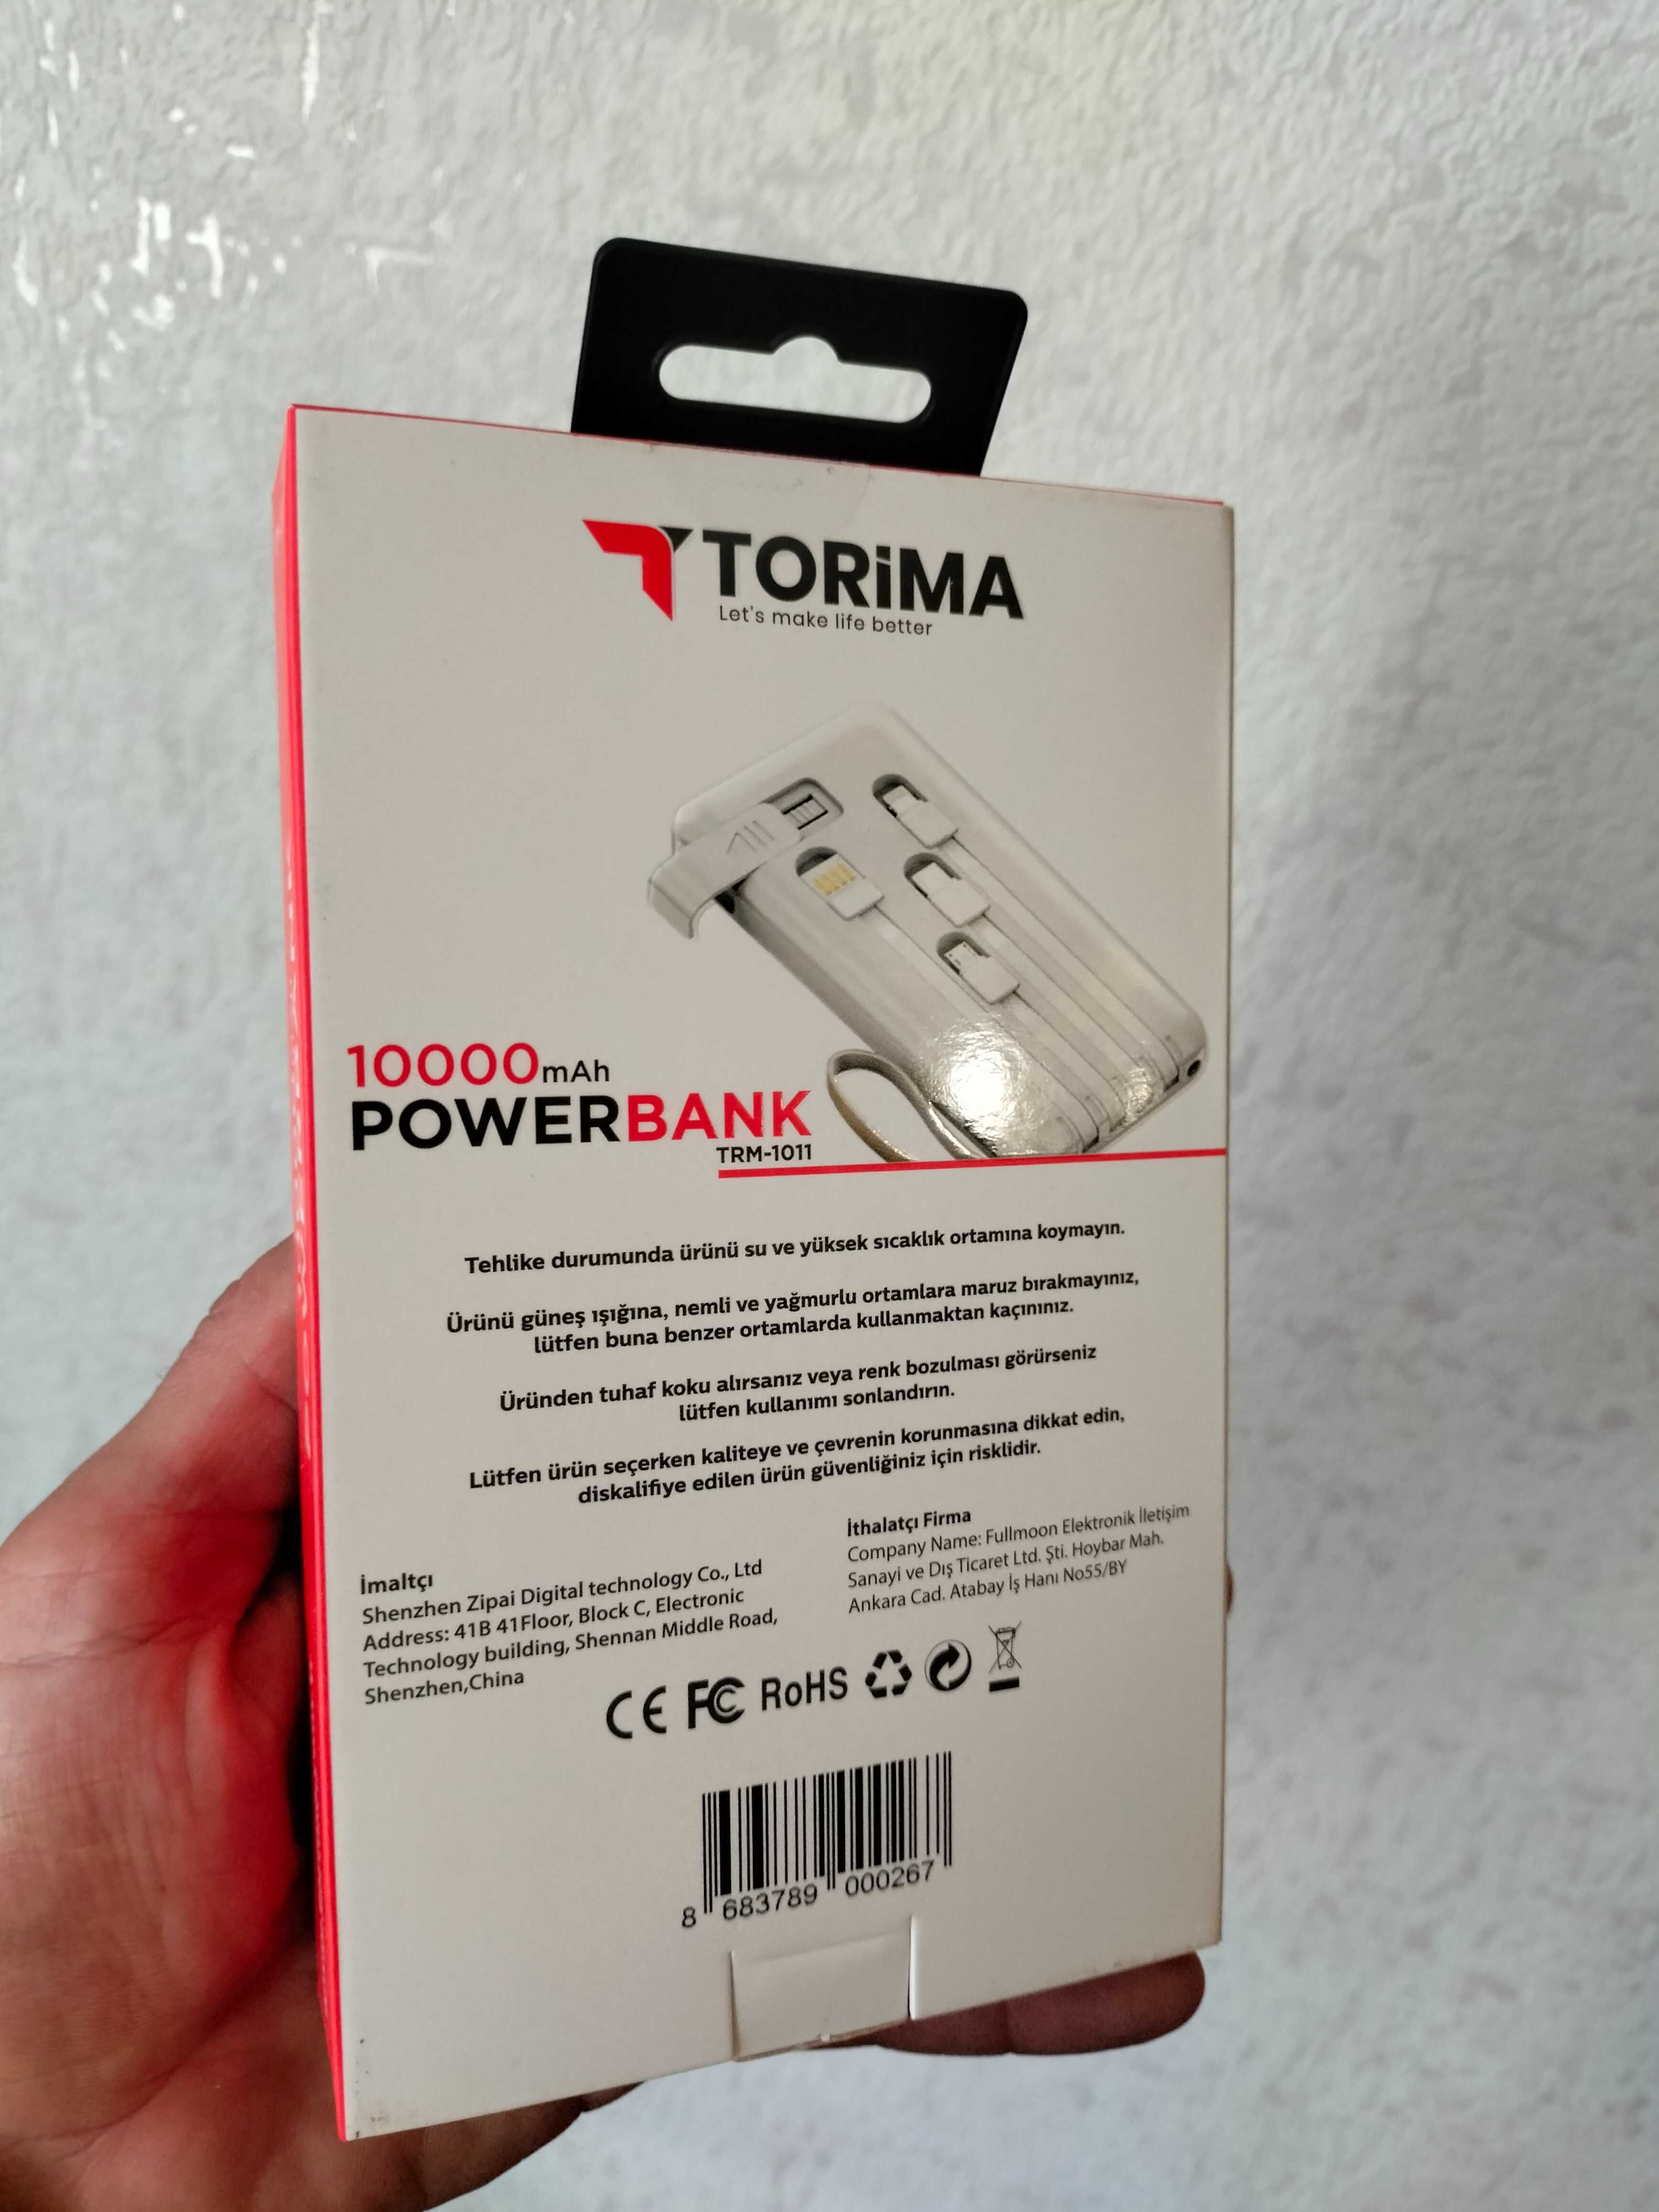 Power Bank Torima 10000mah, (торима), белый.